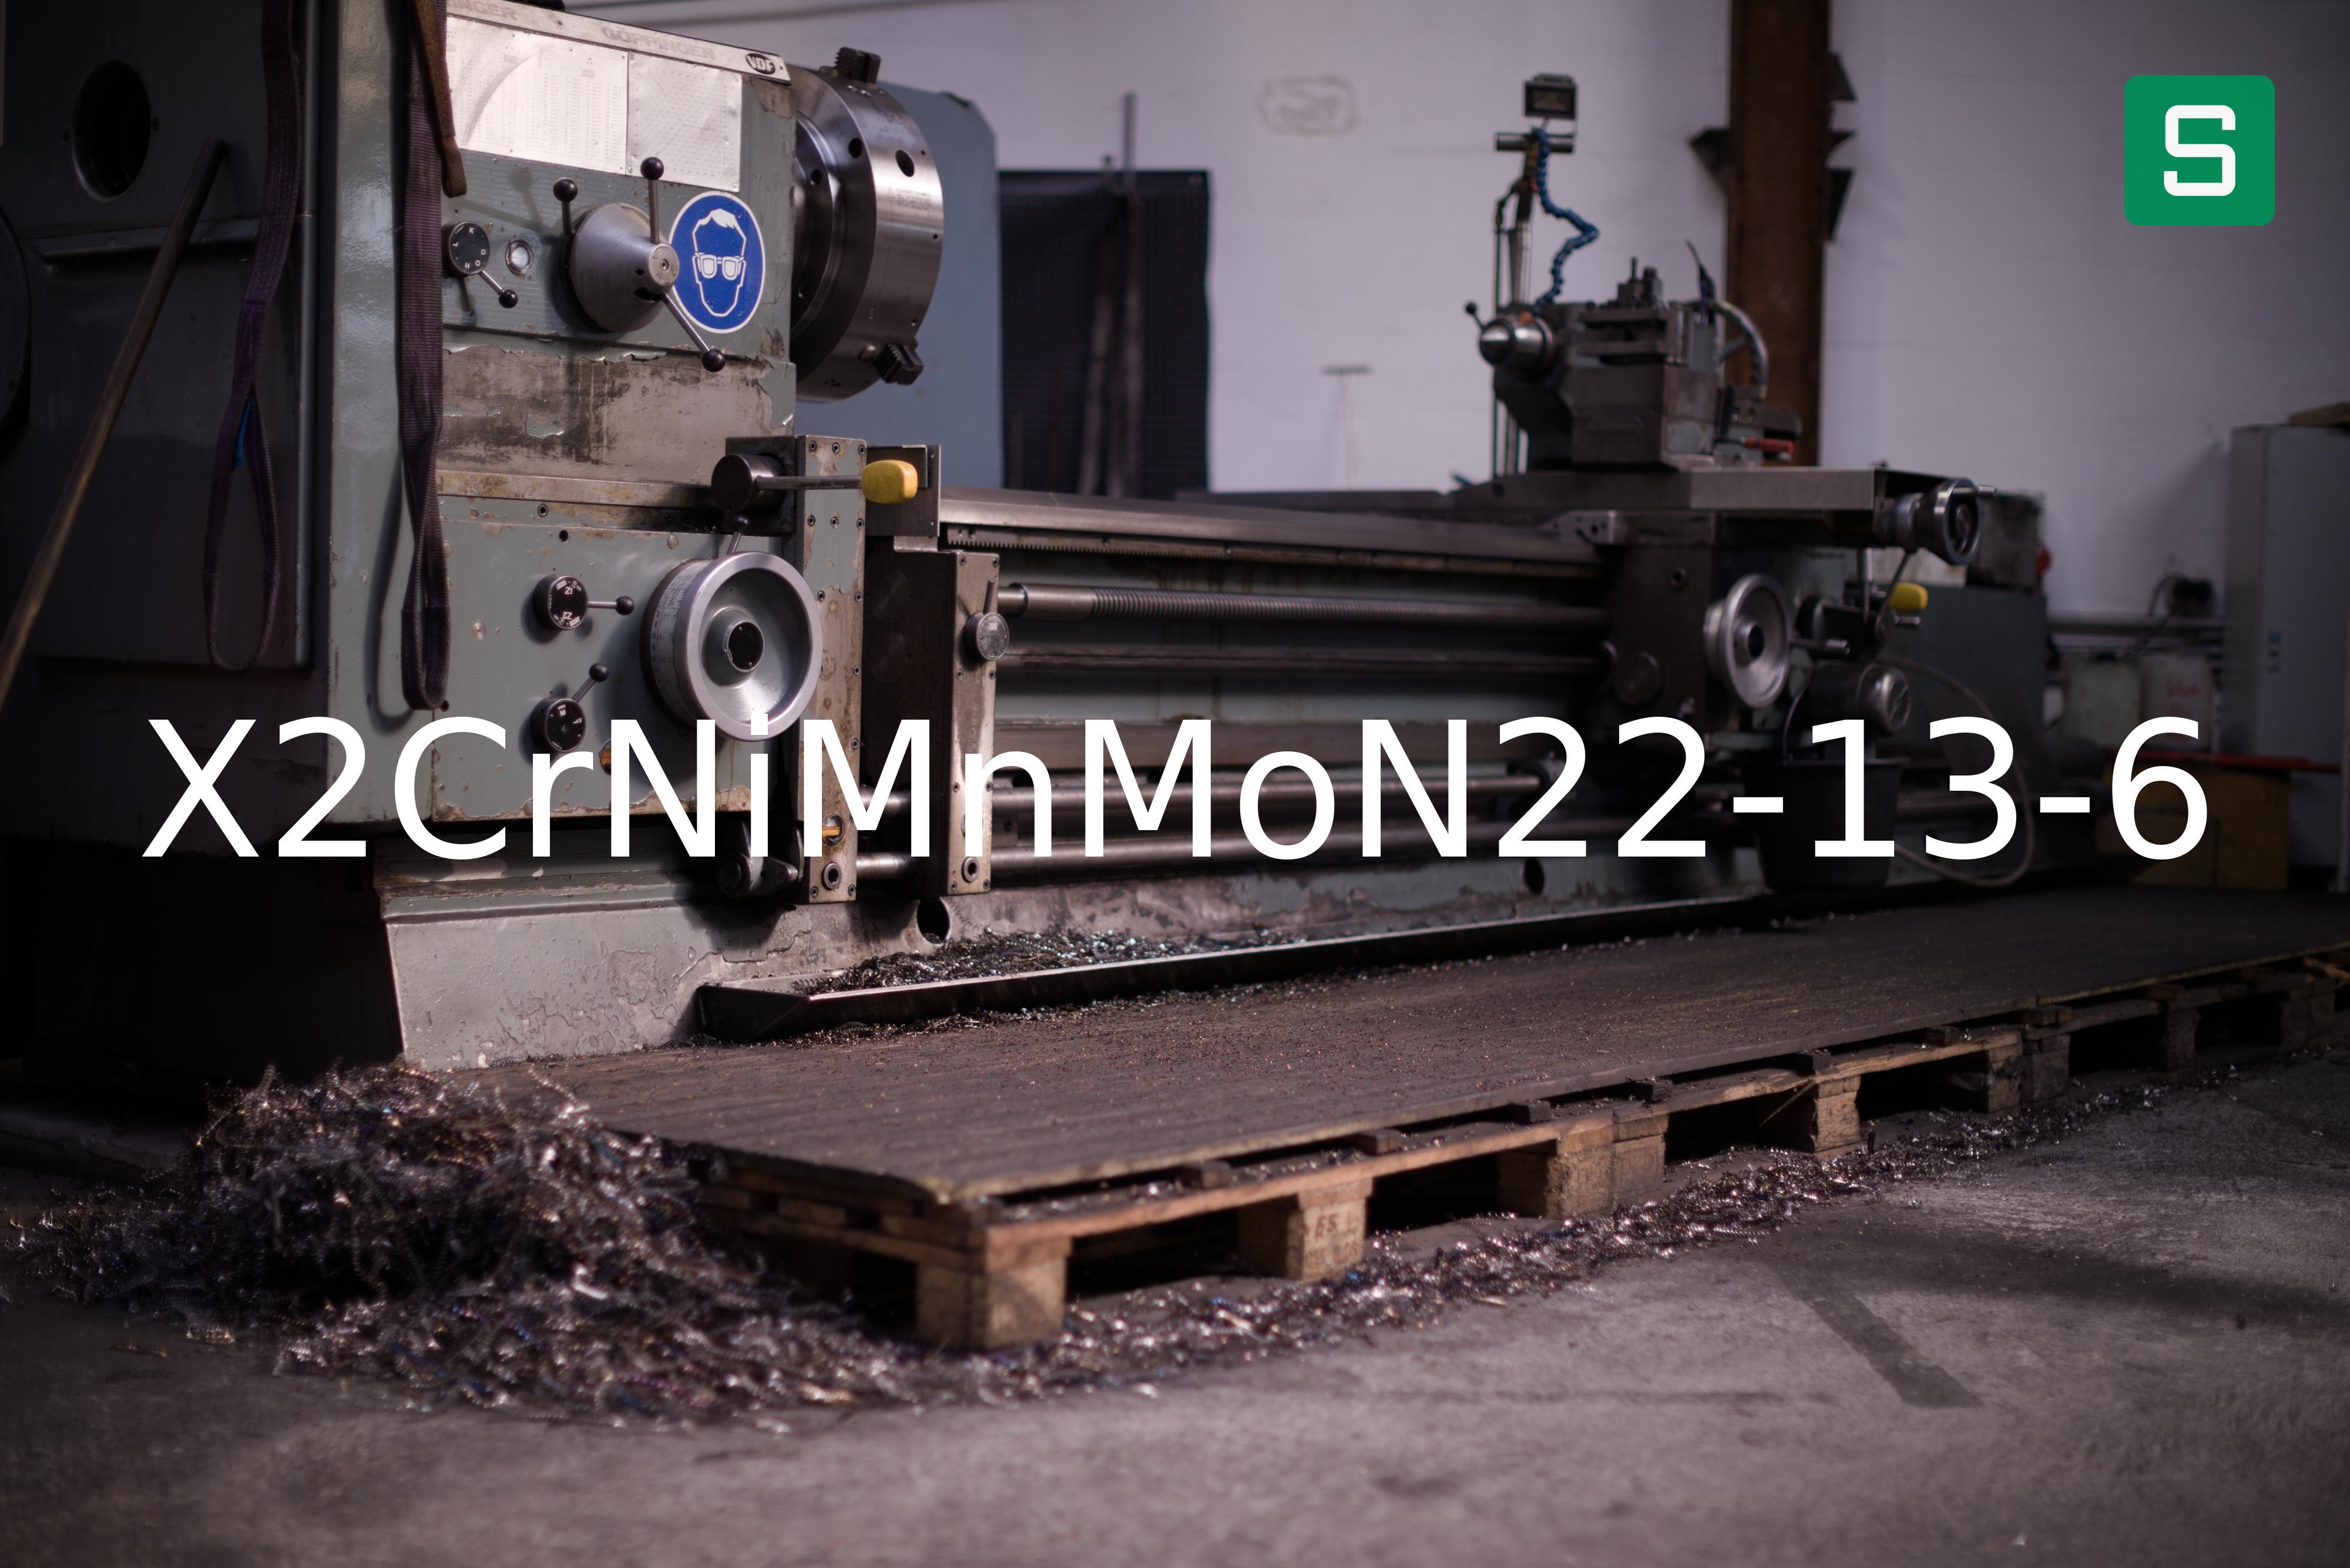 Steel Material: X2CrNiMnMoN22-13-6